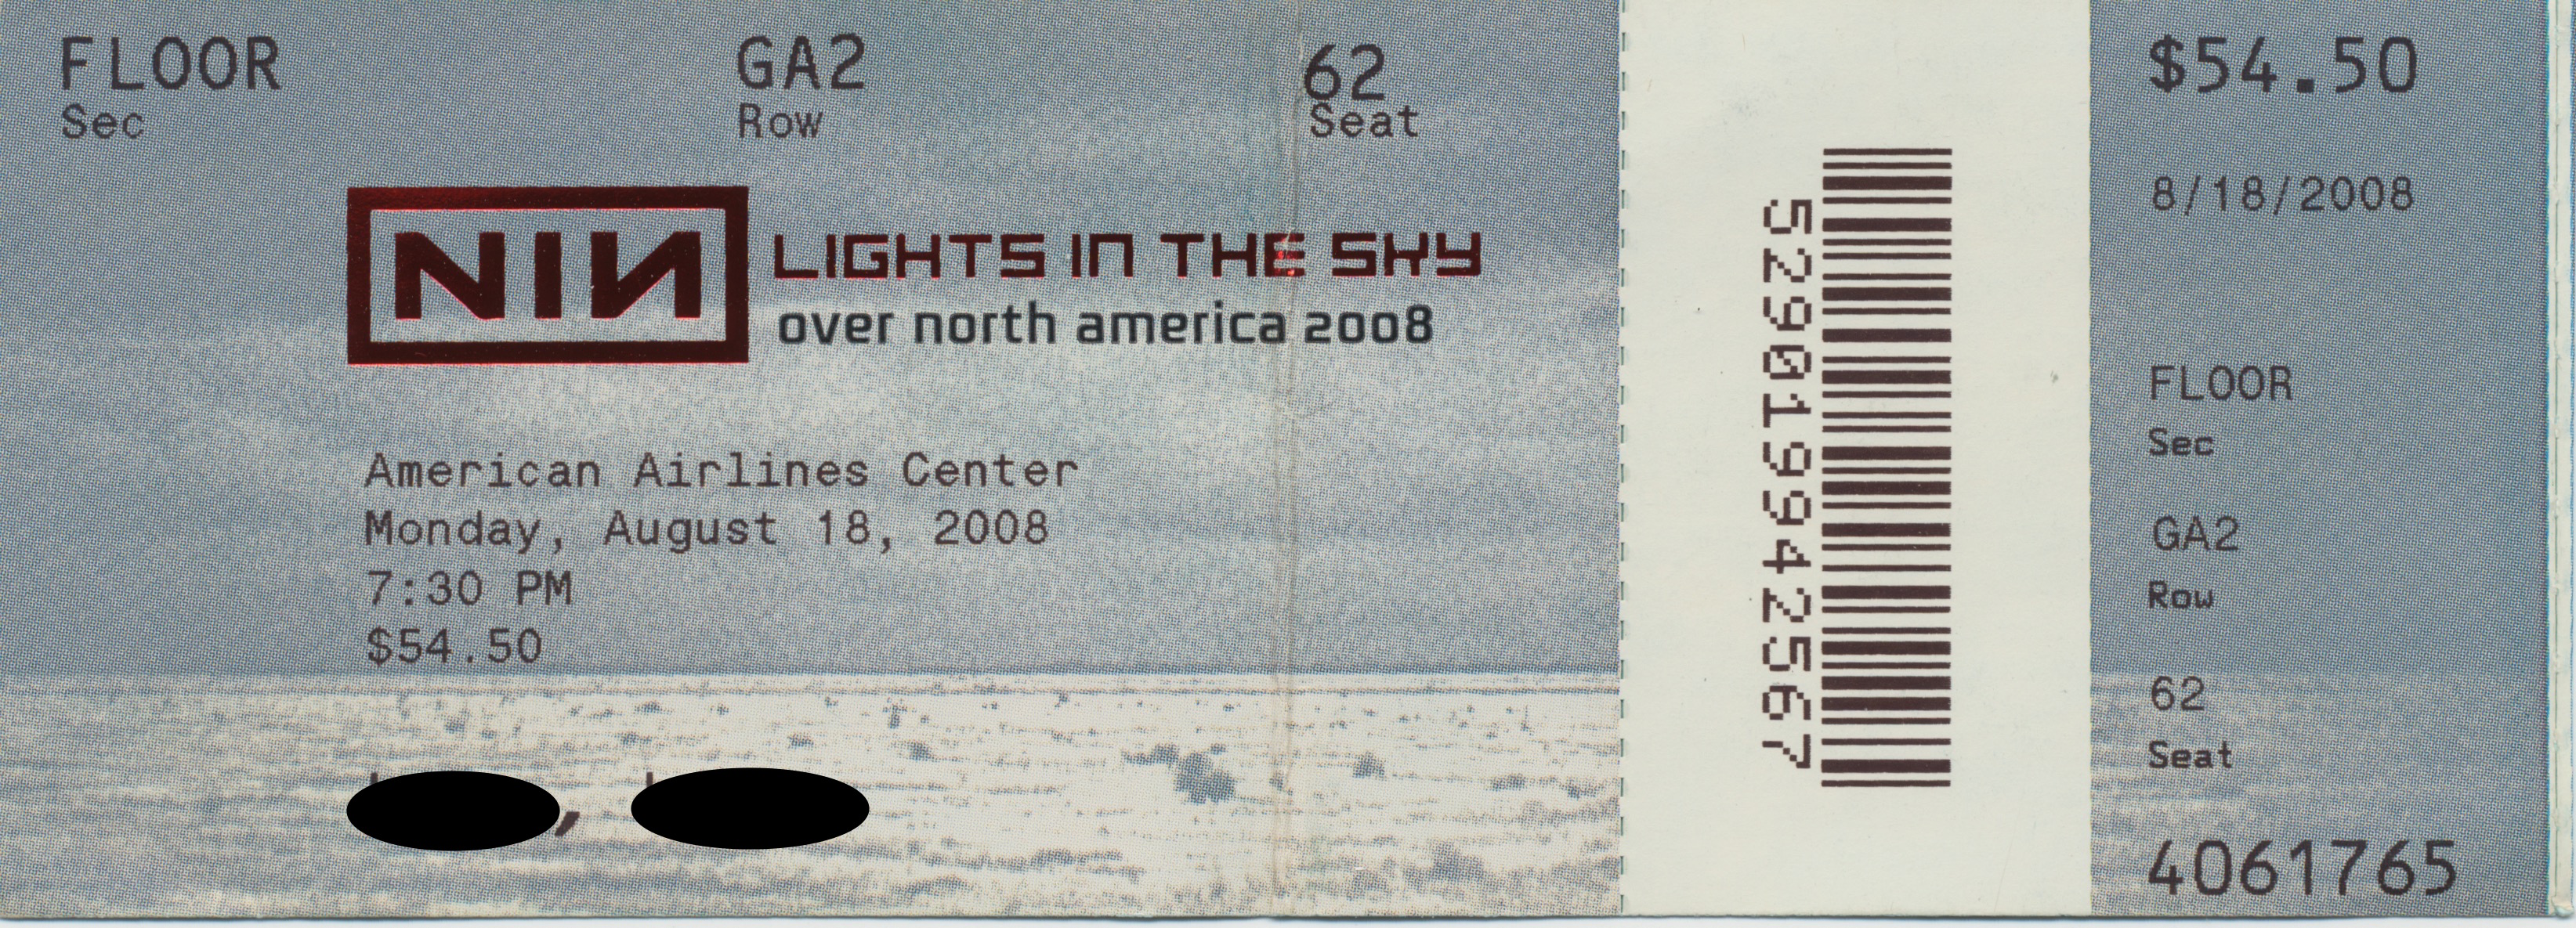 2008/08/18 Ticket